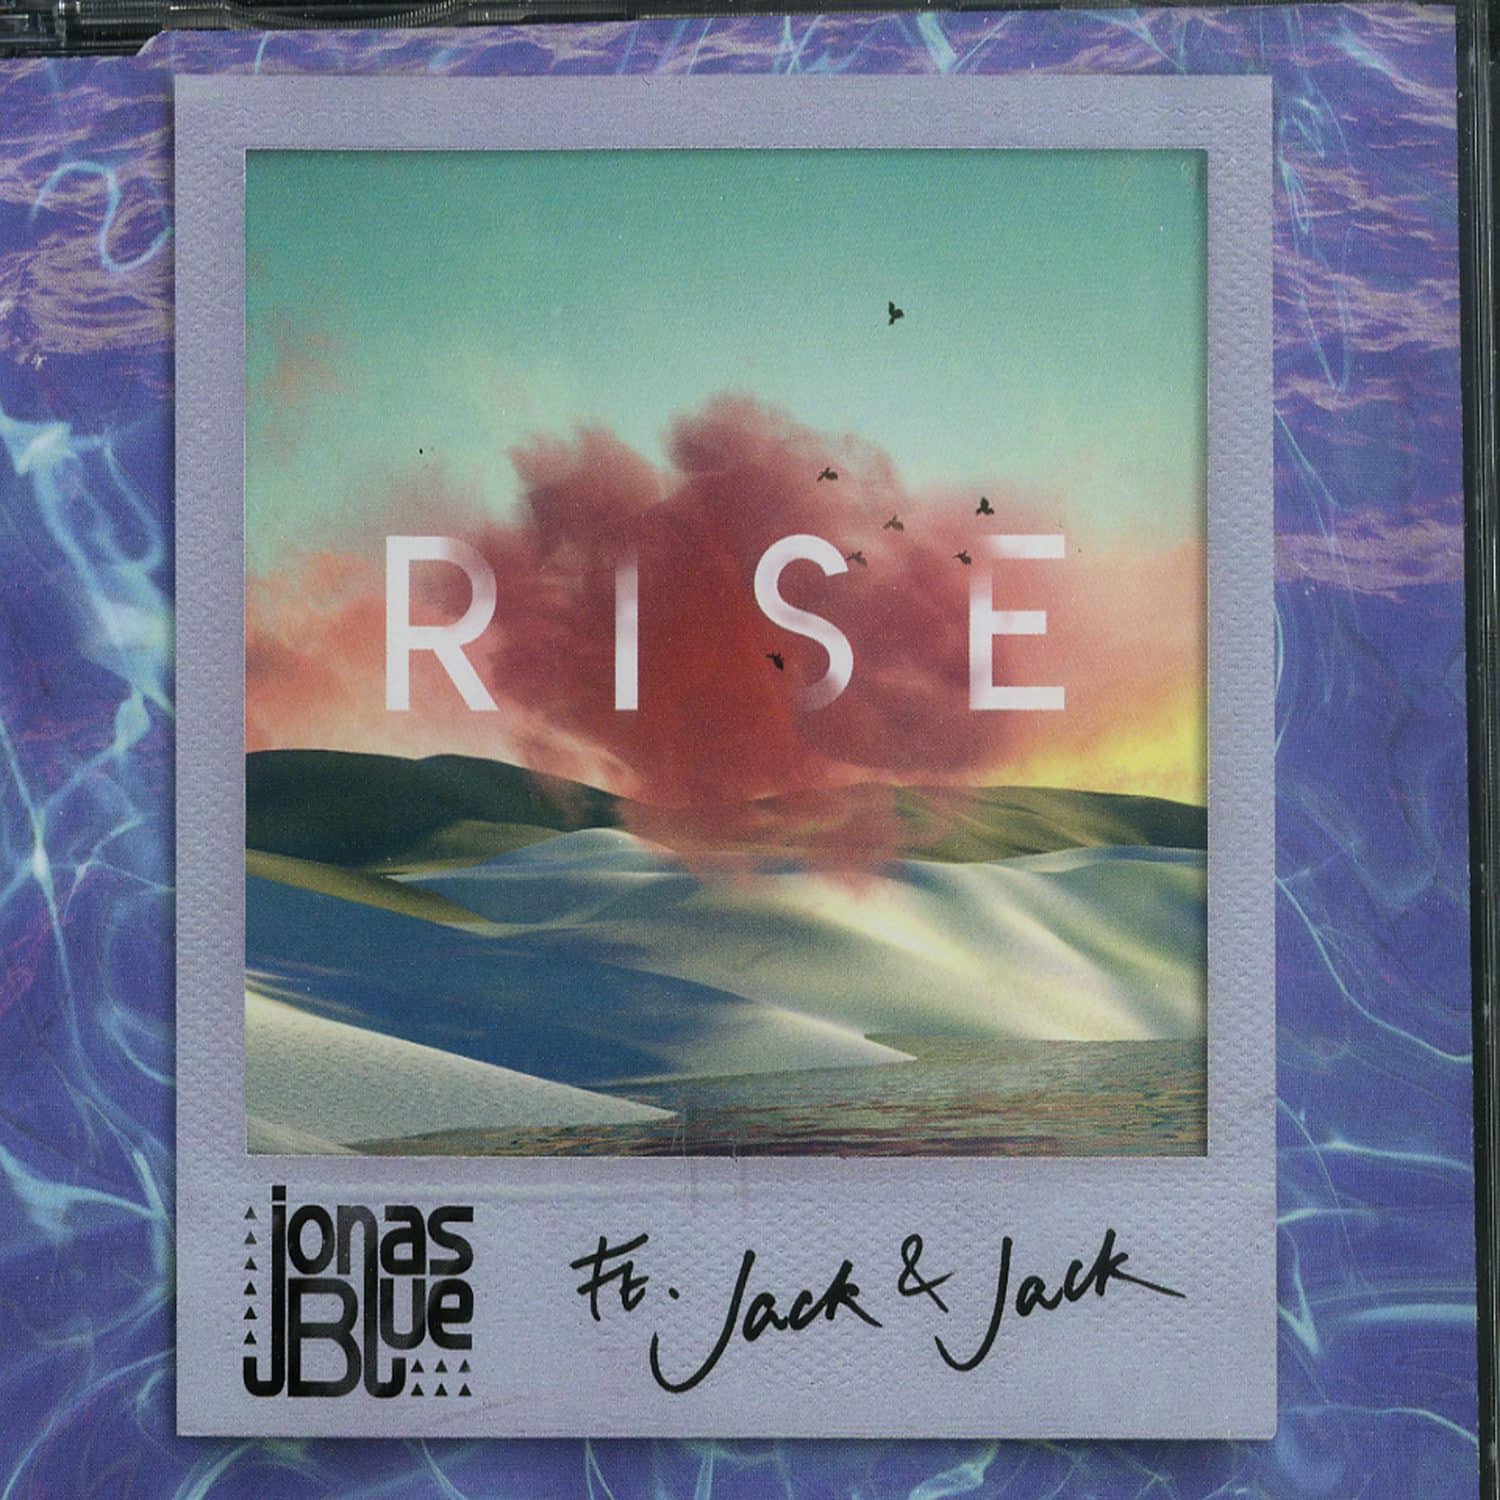 Jonas Blue feat. Jack & Jack - RISE 